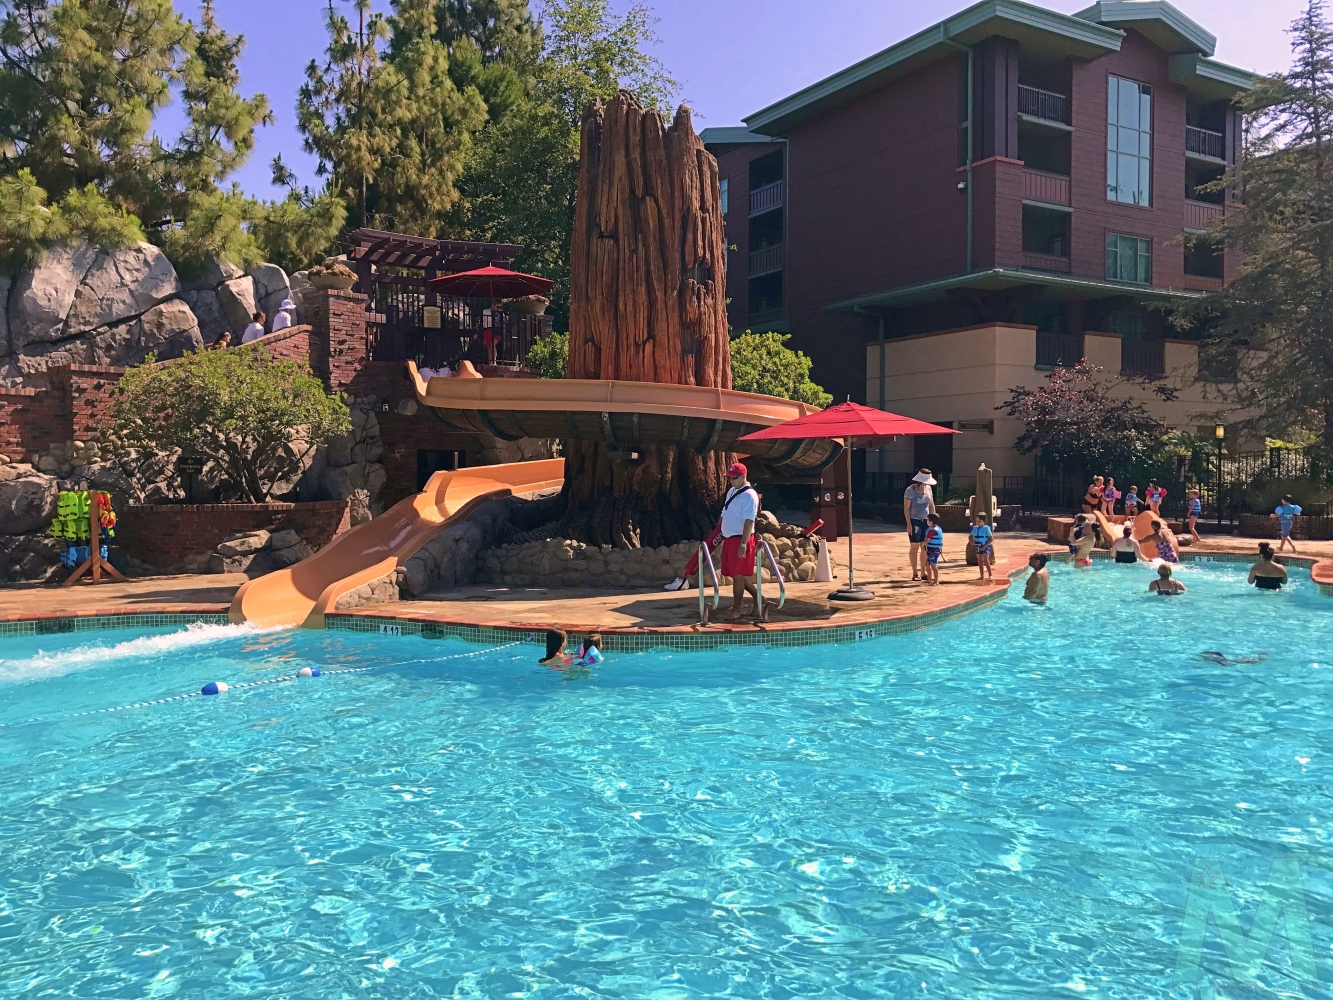 Pools at Disney's Grand Californian Hotel with Magic, Memories, Mayhem